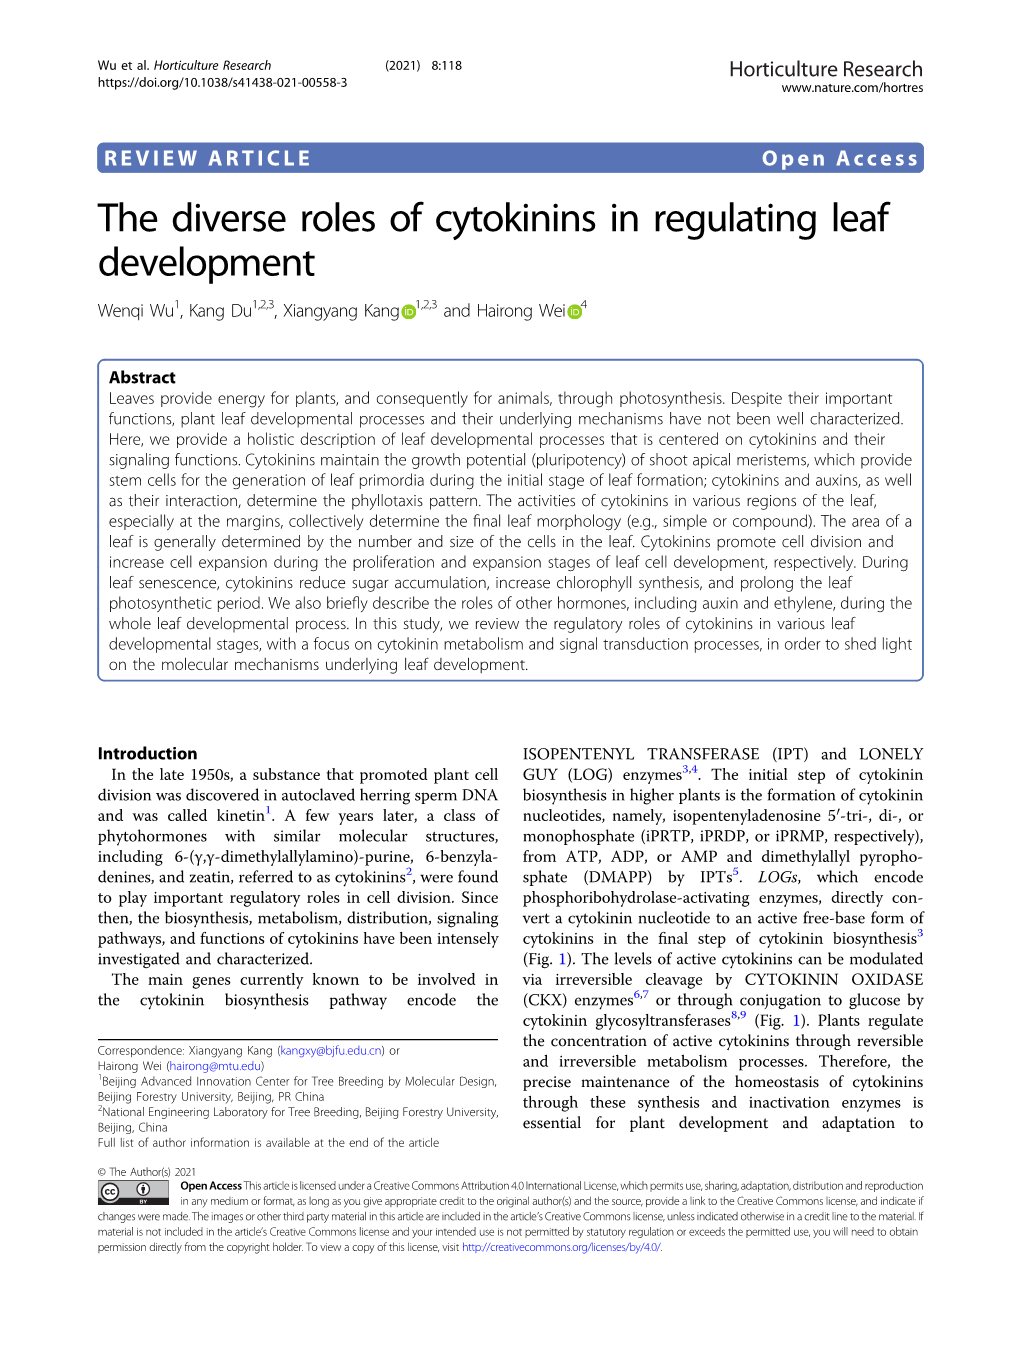 The Diverse Roles of Cytokinins in Regulating Leaf Development Wenqi Wu1,Kangdu1,2,3, Xiangyang Kang 1,2,3 and Hairong Wei 4